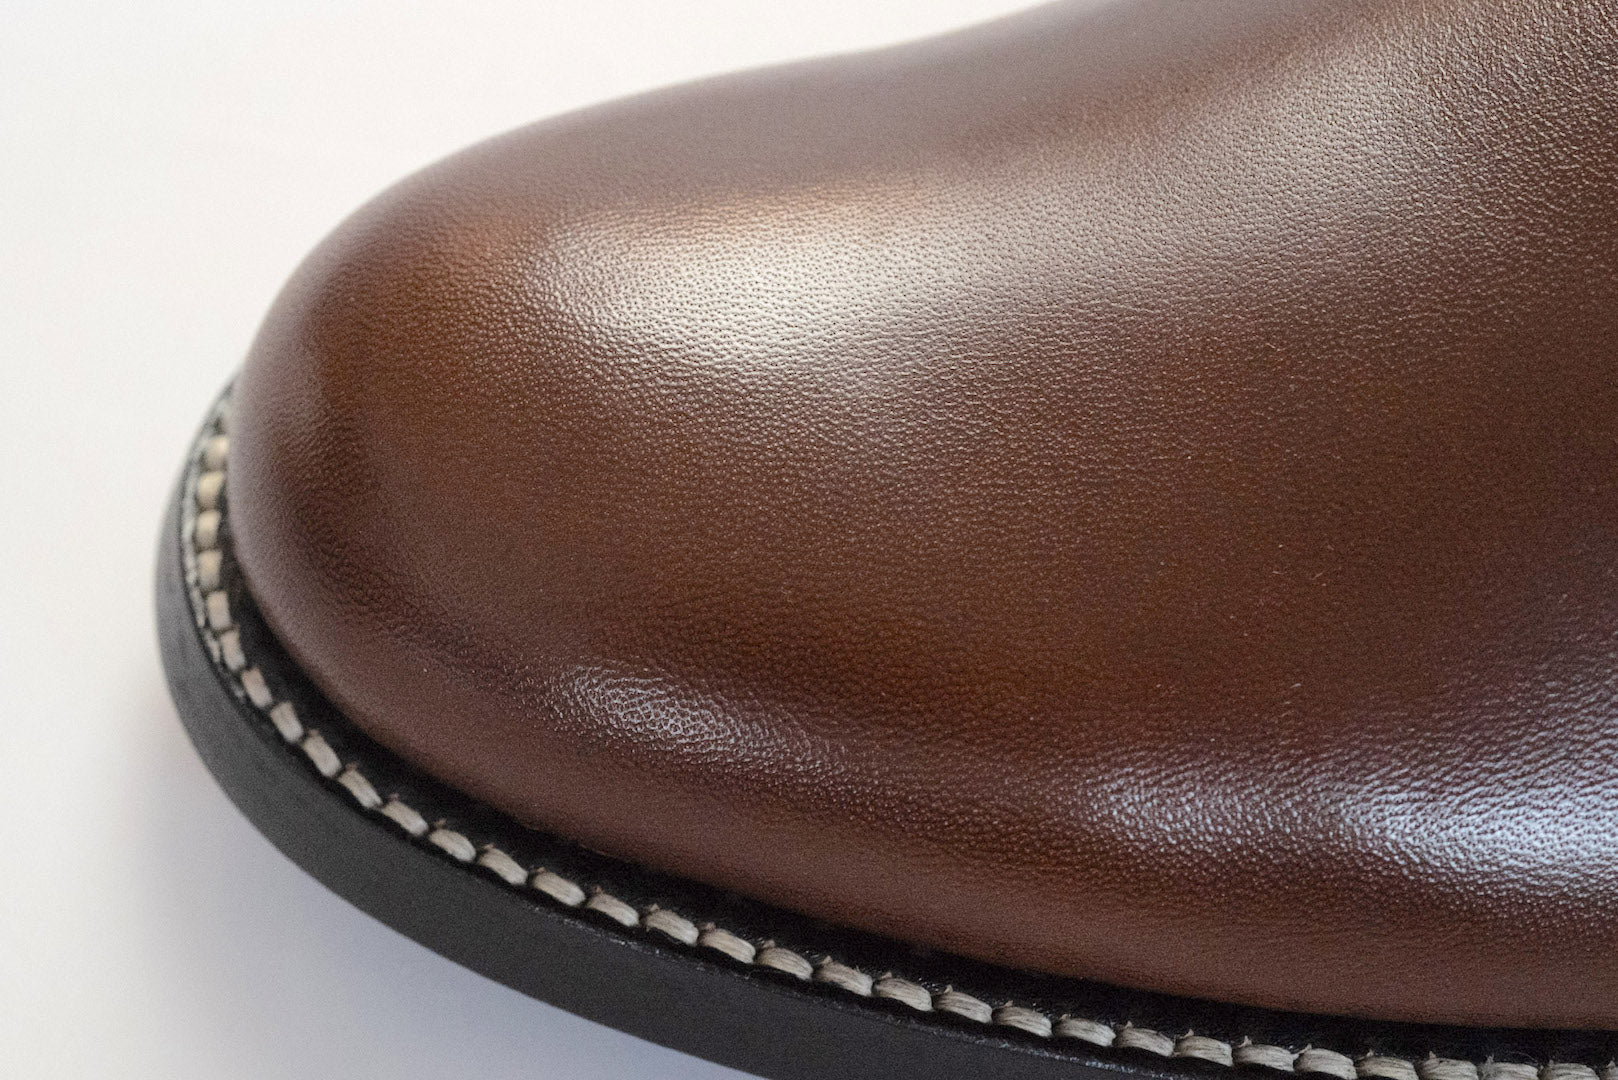 The Flat Head Horsehide Serviceman Shoes (Brown Tea-core)